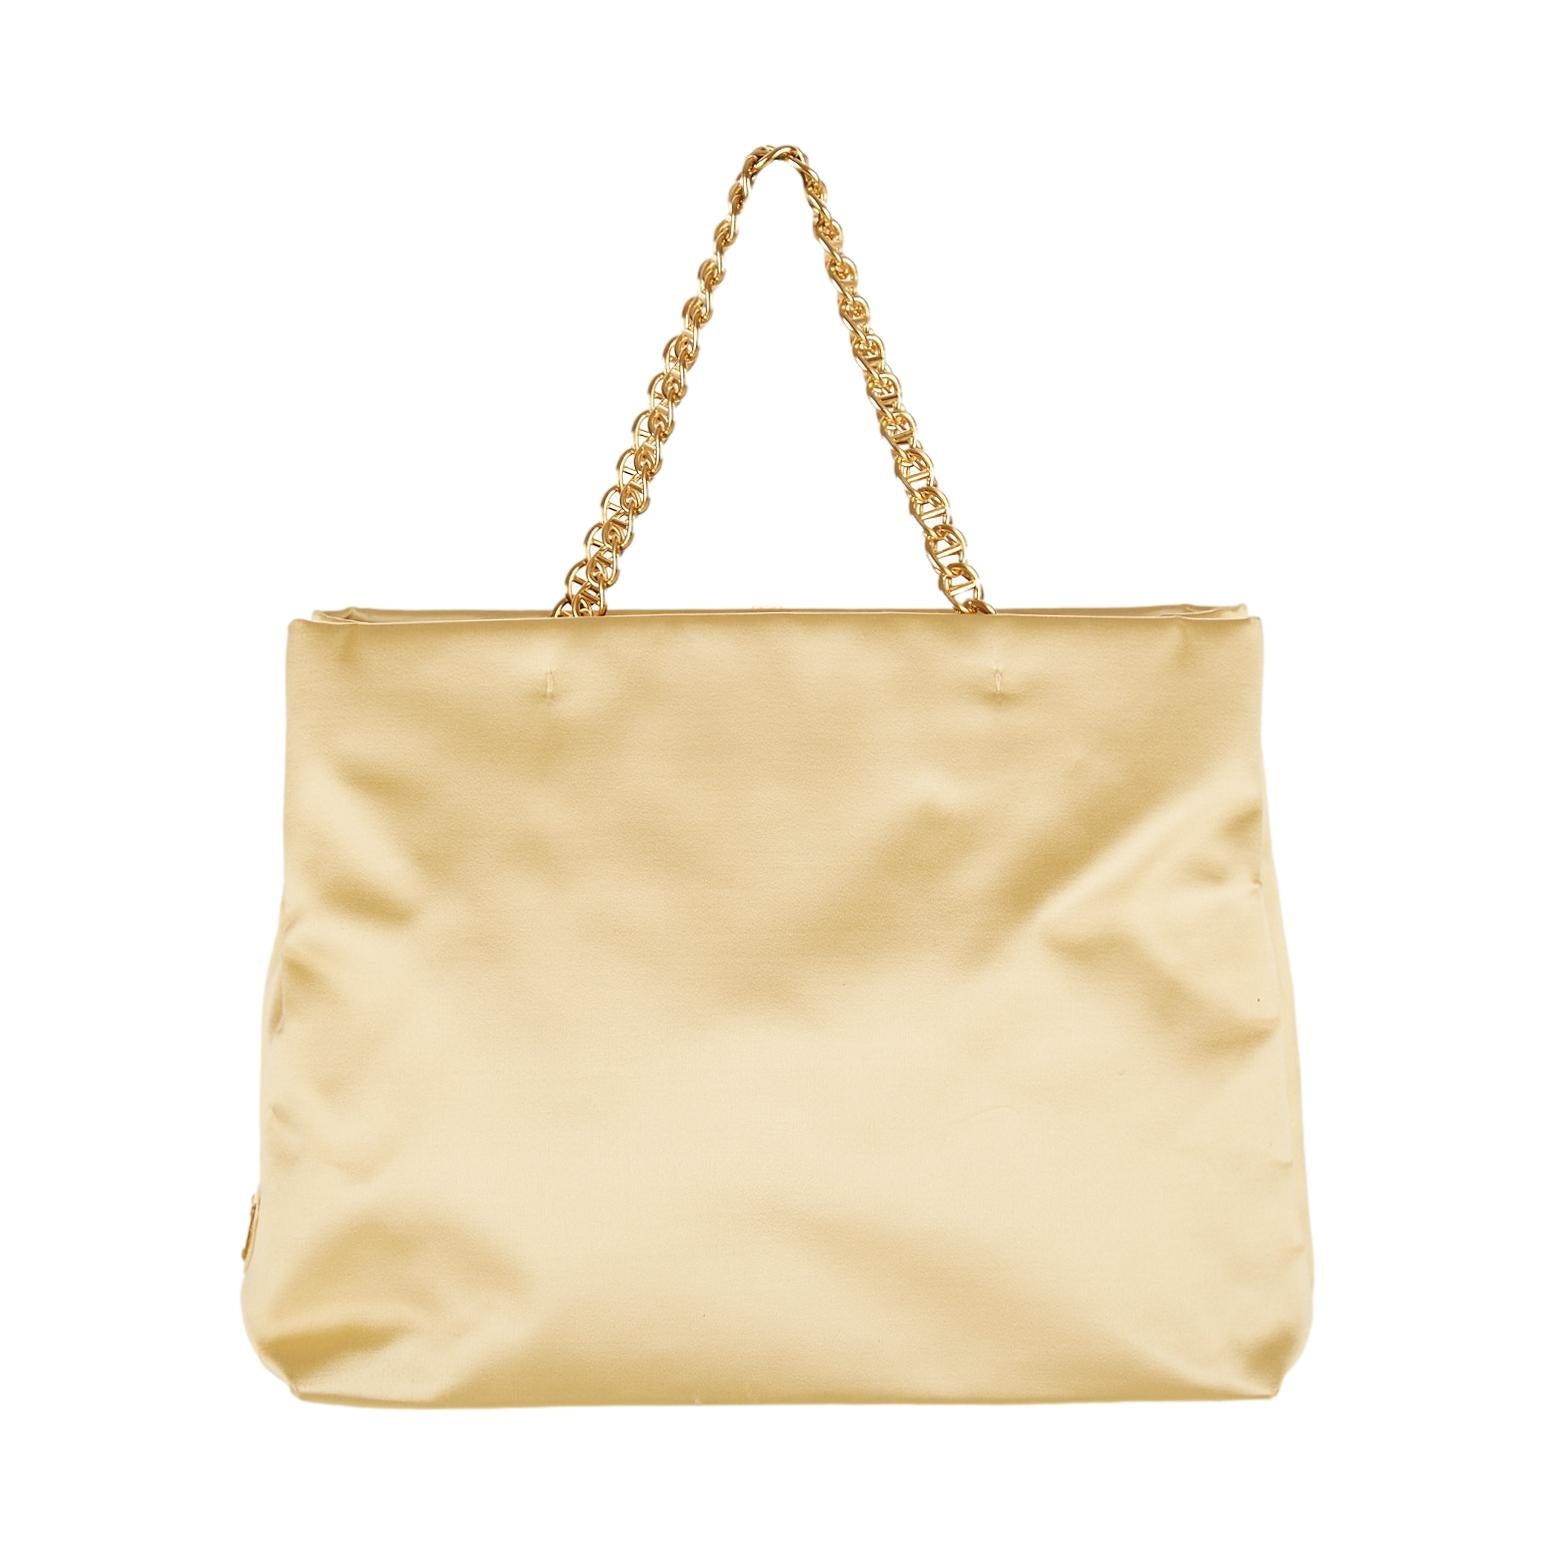 Prada Gold Satin Chain Bag